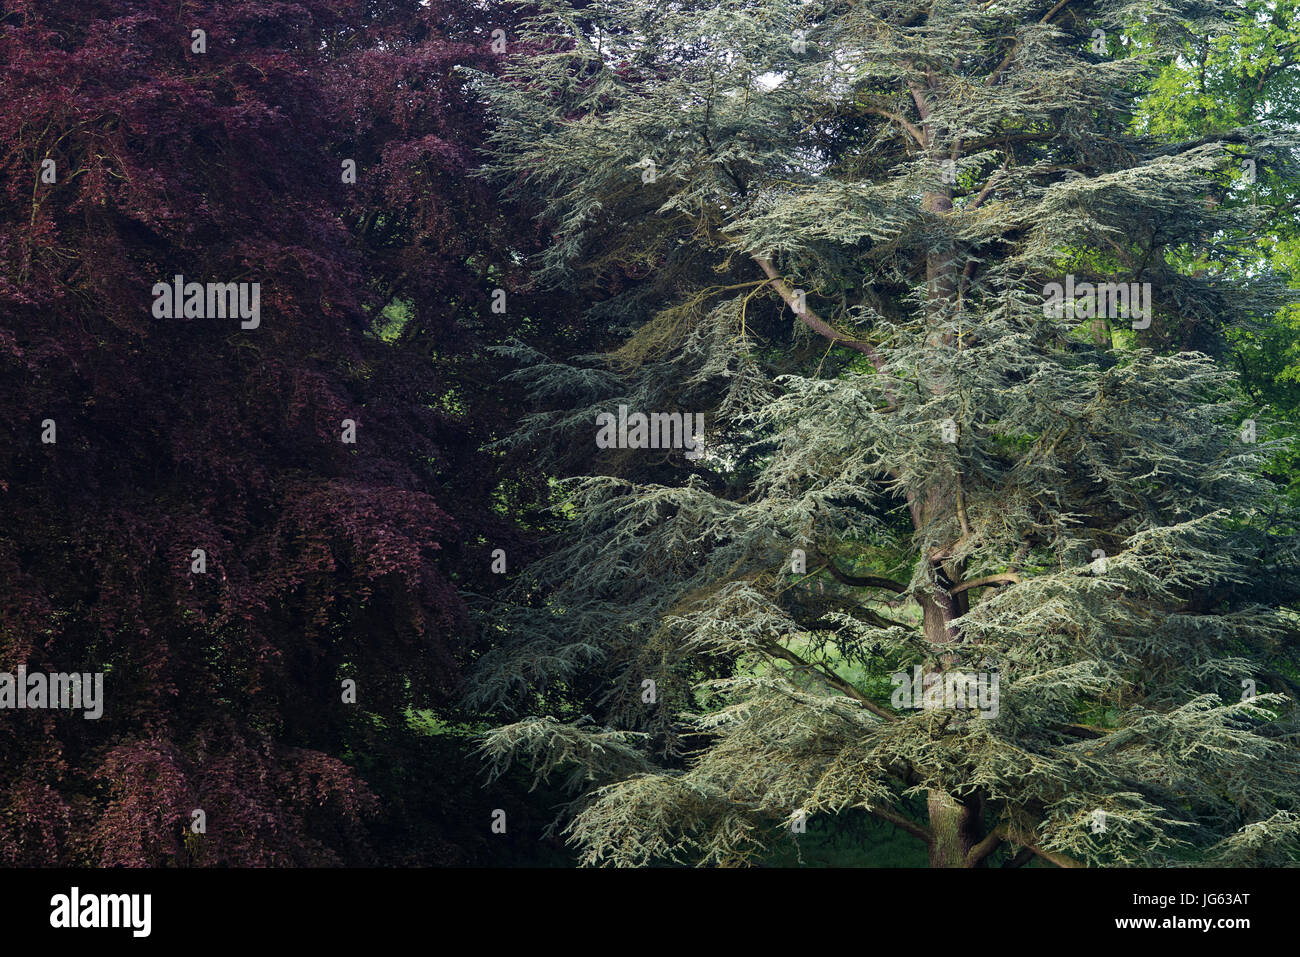 Cedrus libani and Fagus sylvatica Purpurea. Lebanon Cedar tree and Copper beech tree. Oxfordshire, UK Stock Photo